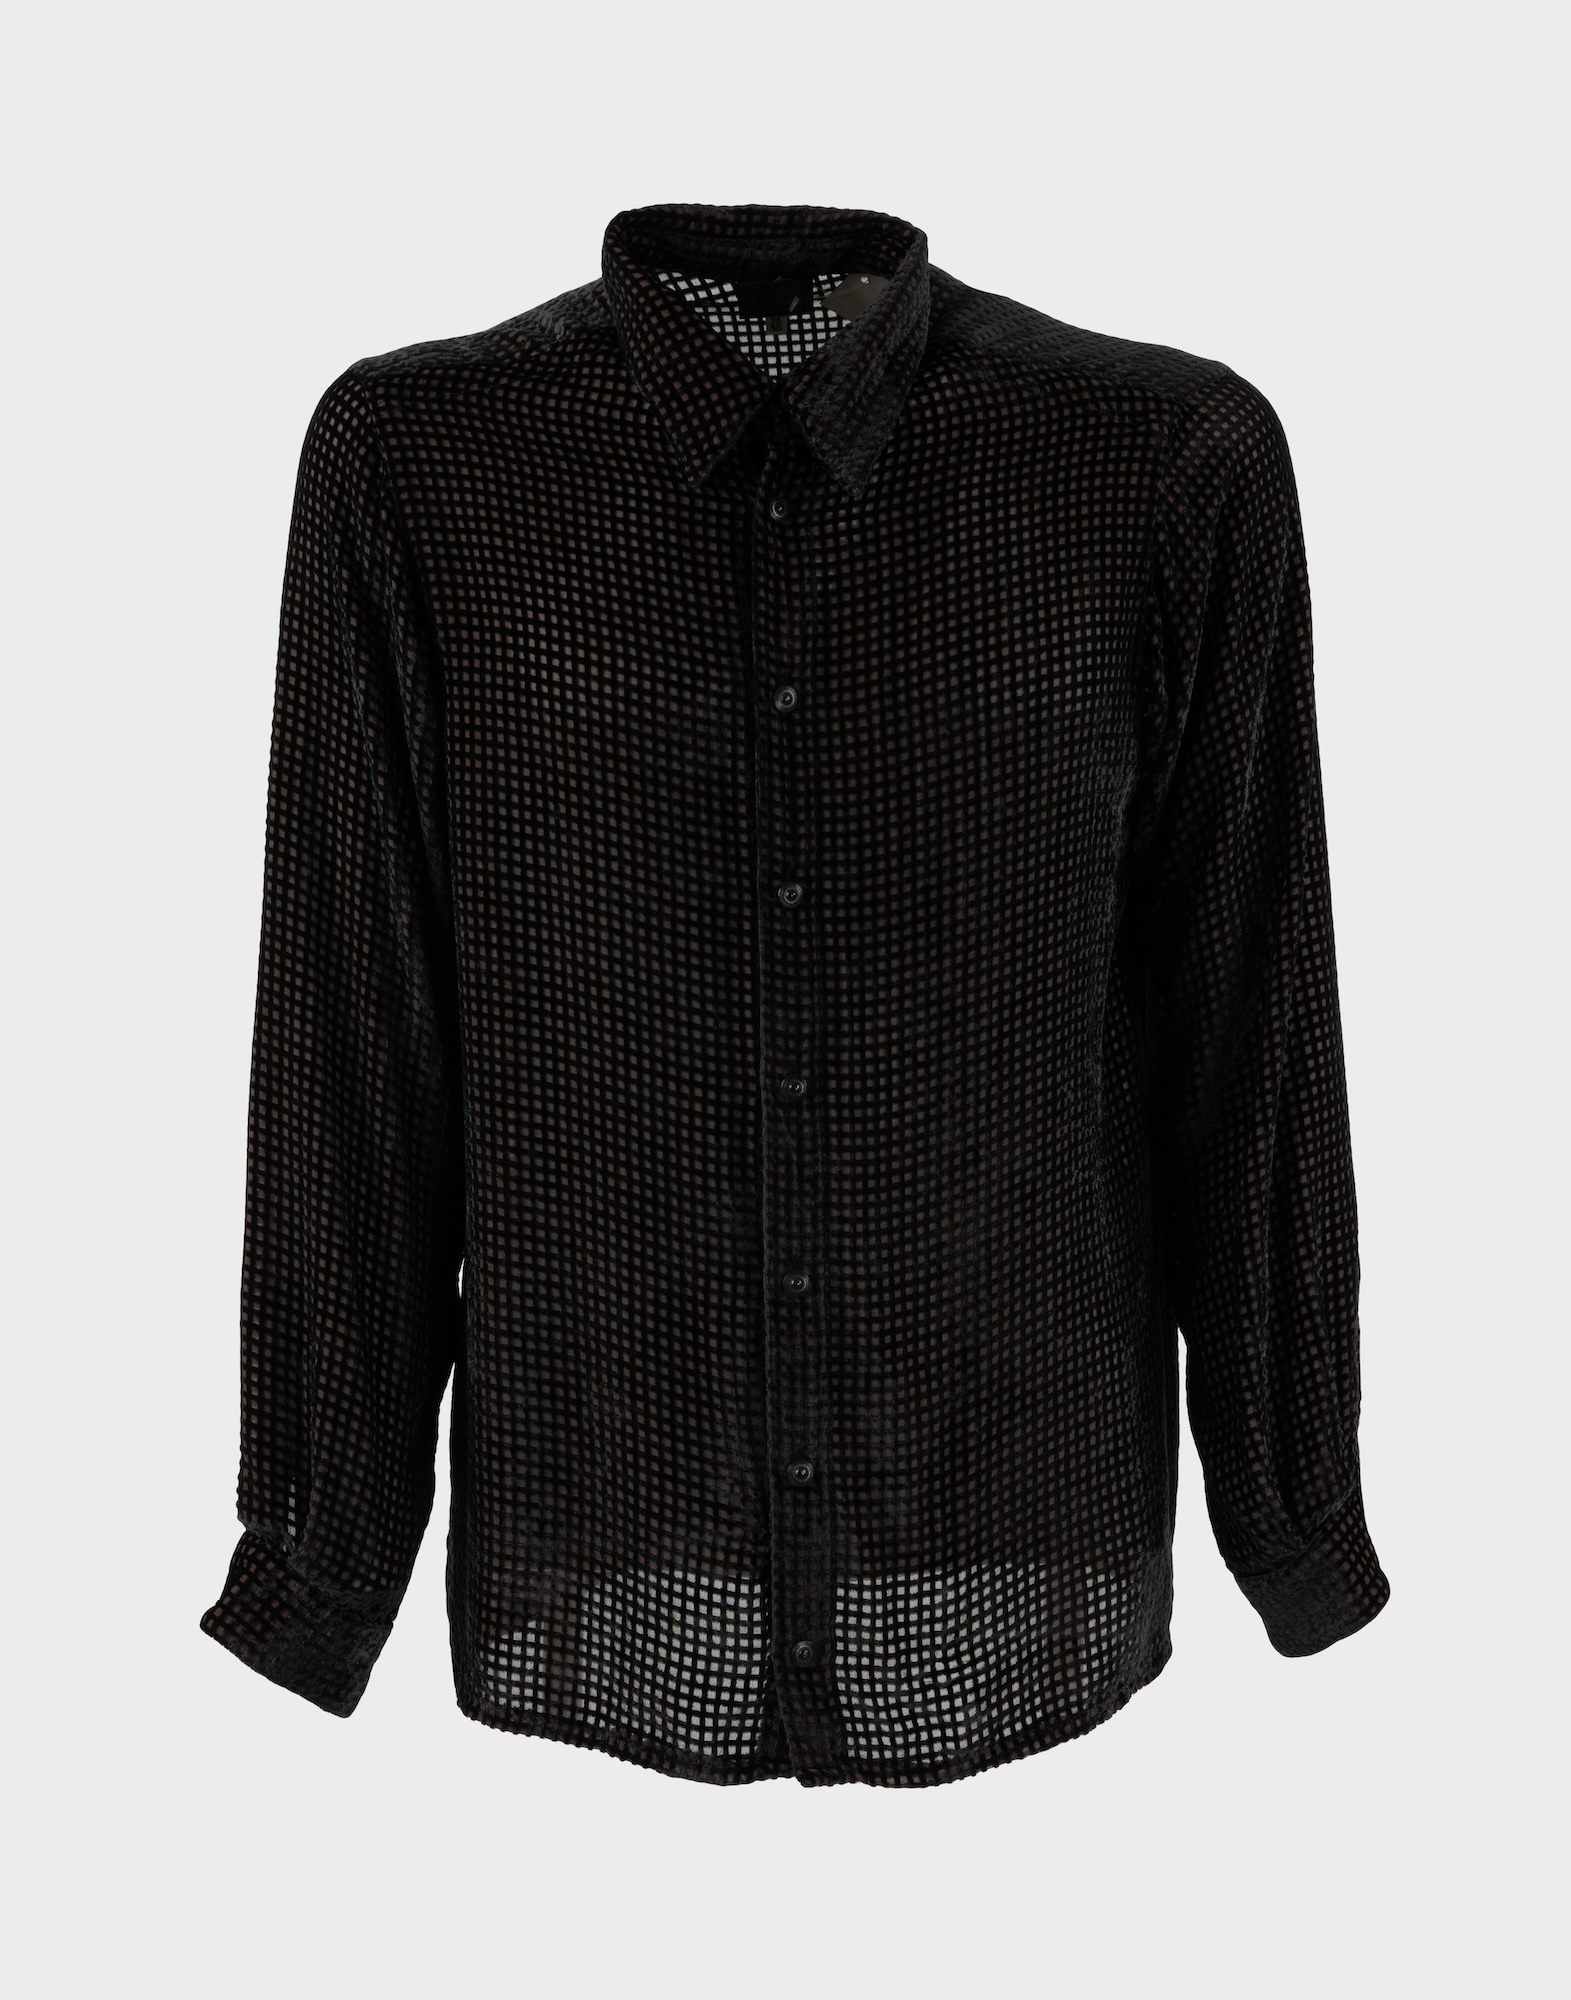 camicia versus nera da uomo a maniche lunghe con trama trasparente di quadratini